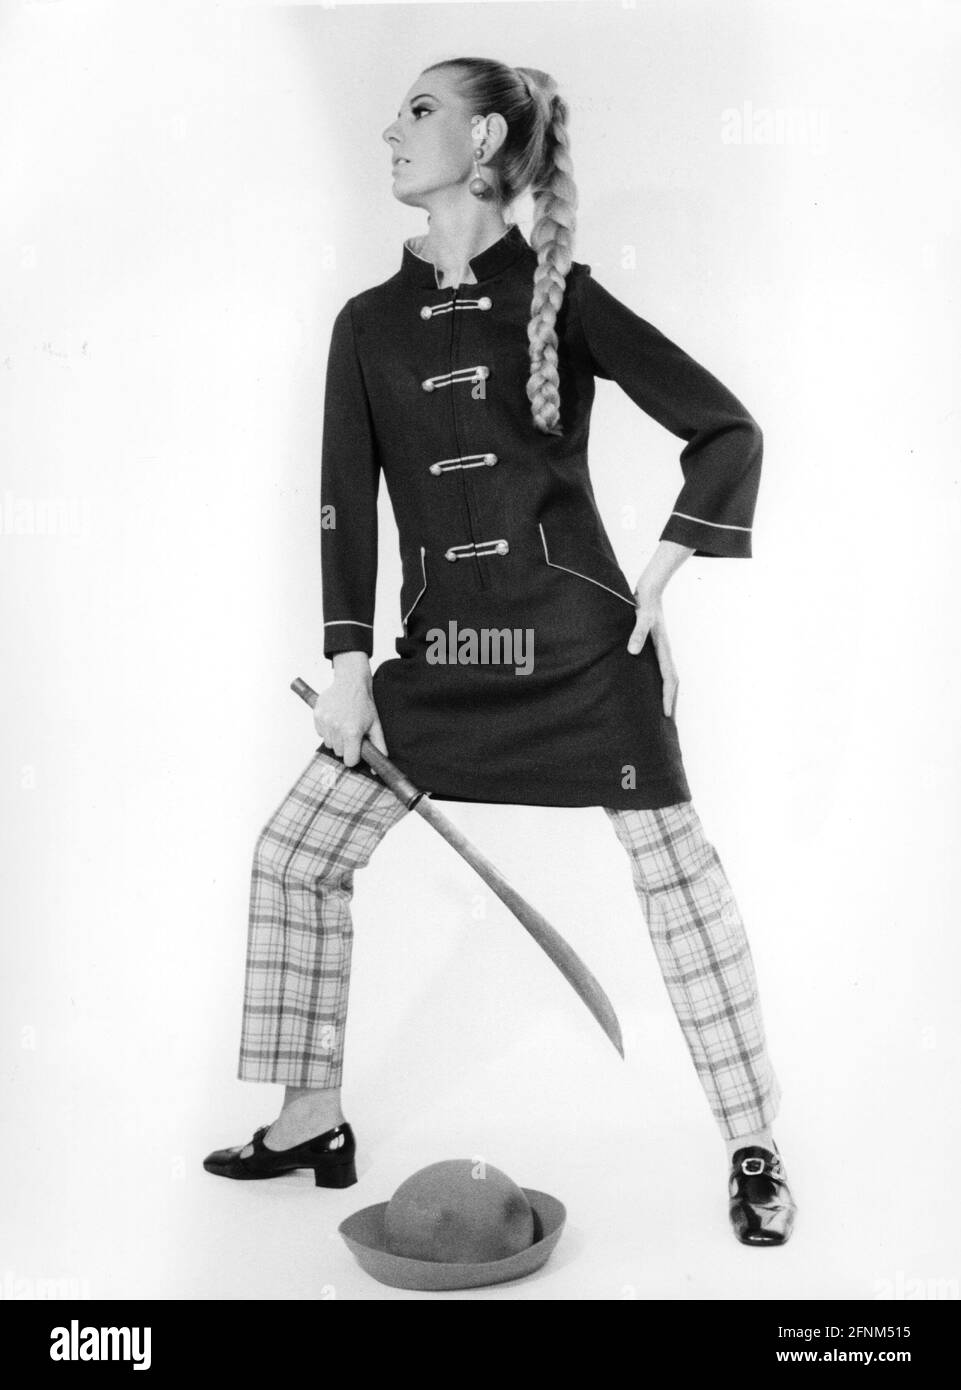 Mode, 70er Jahre, Damenmode, Frau in karierter Hose, Kurzmantel, Herbstkollektion, ZUSÄTZLICHE-RIGHTS-CLEARANCE-INFO-NOT-AVAILABLE Stockfoto